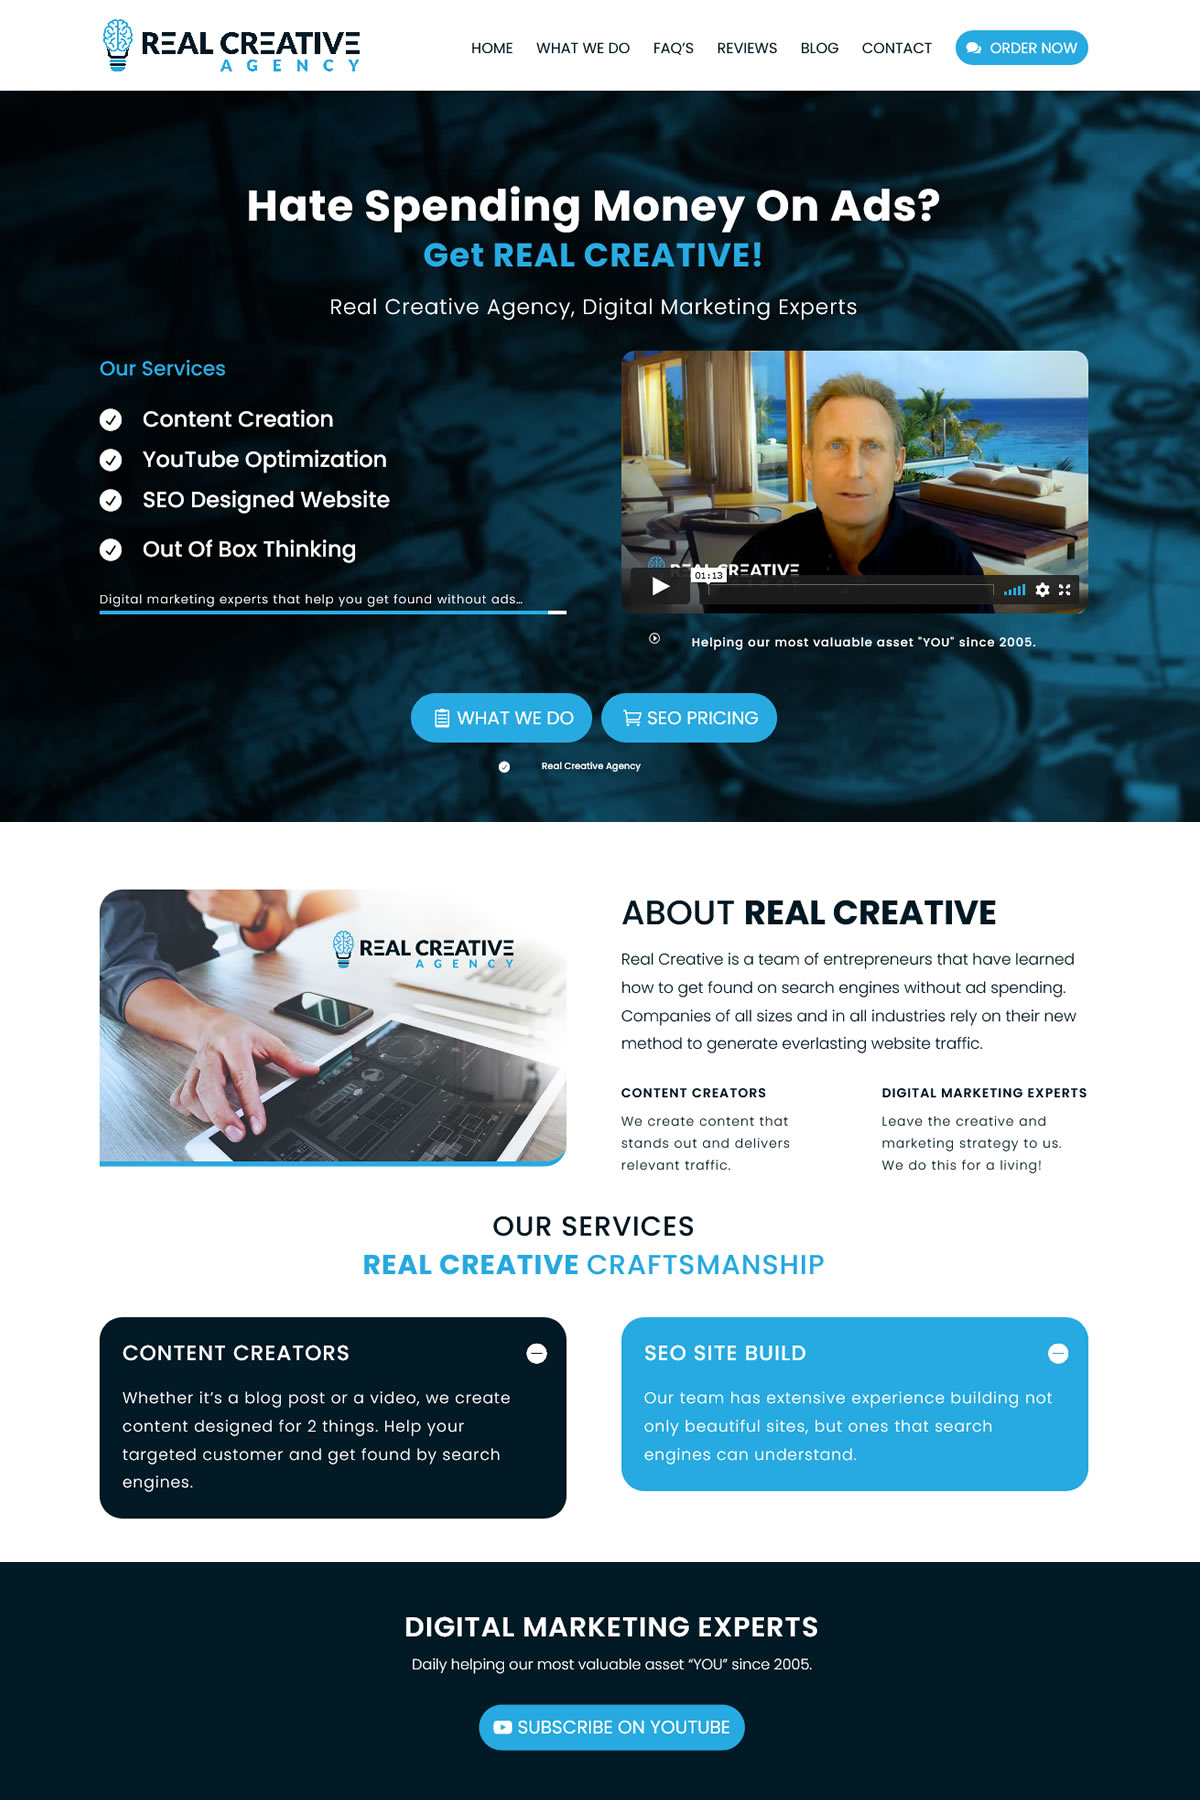 real-creative-agency-content-writer-gohooper-top-seo-web-design-company-miami-fl